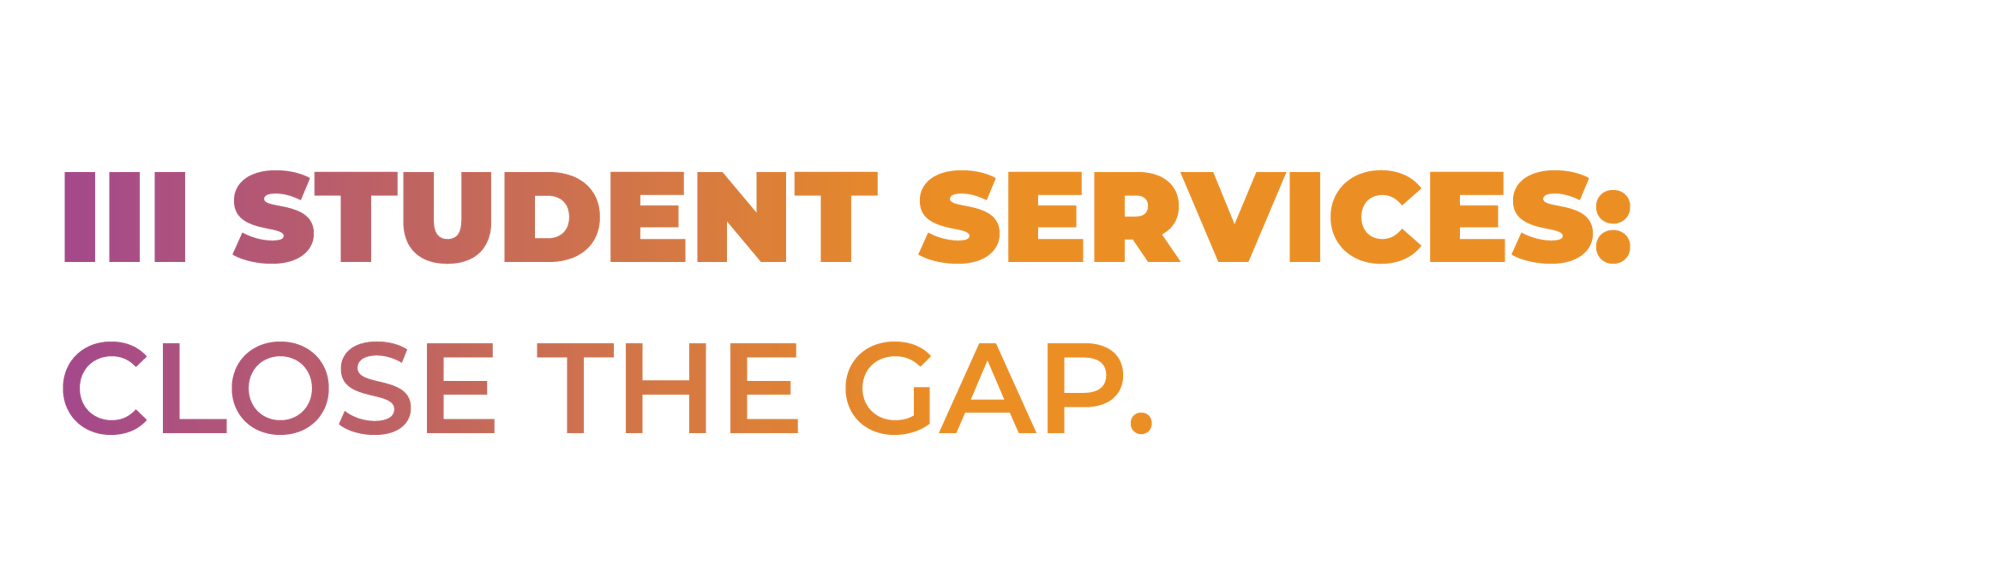 Theme 3: Student Services. Close the Gap. 